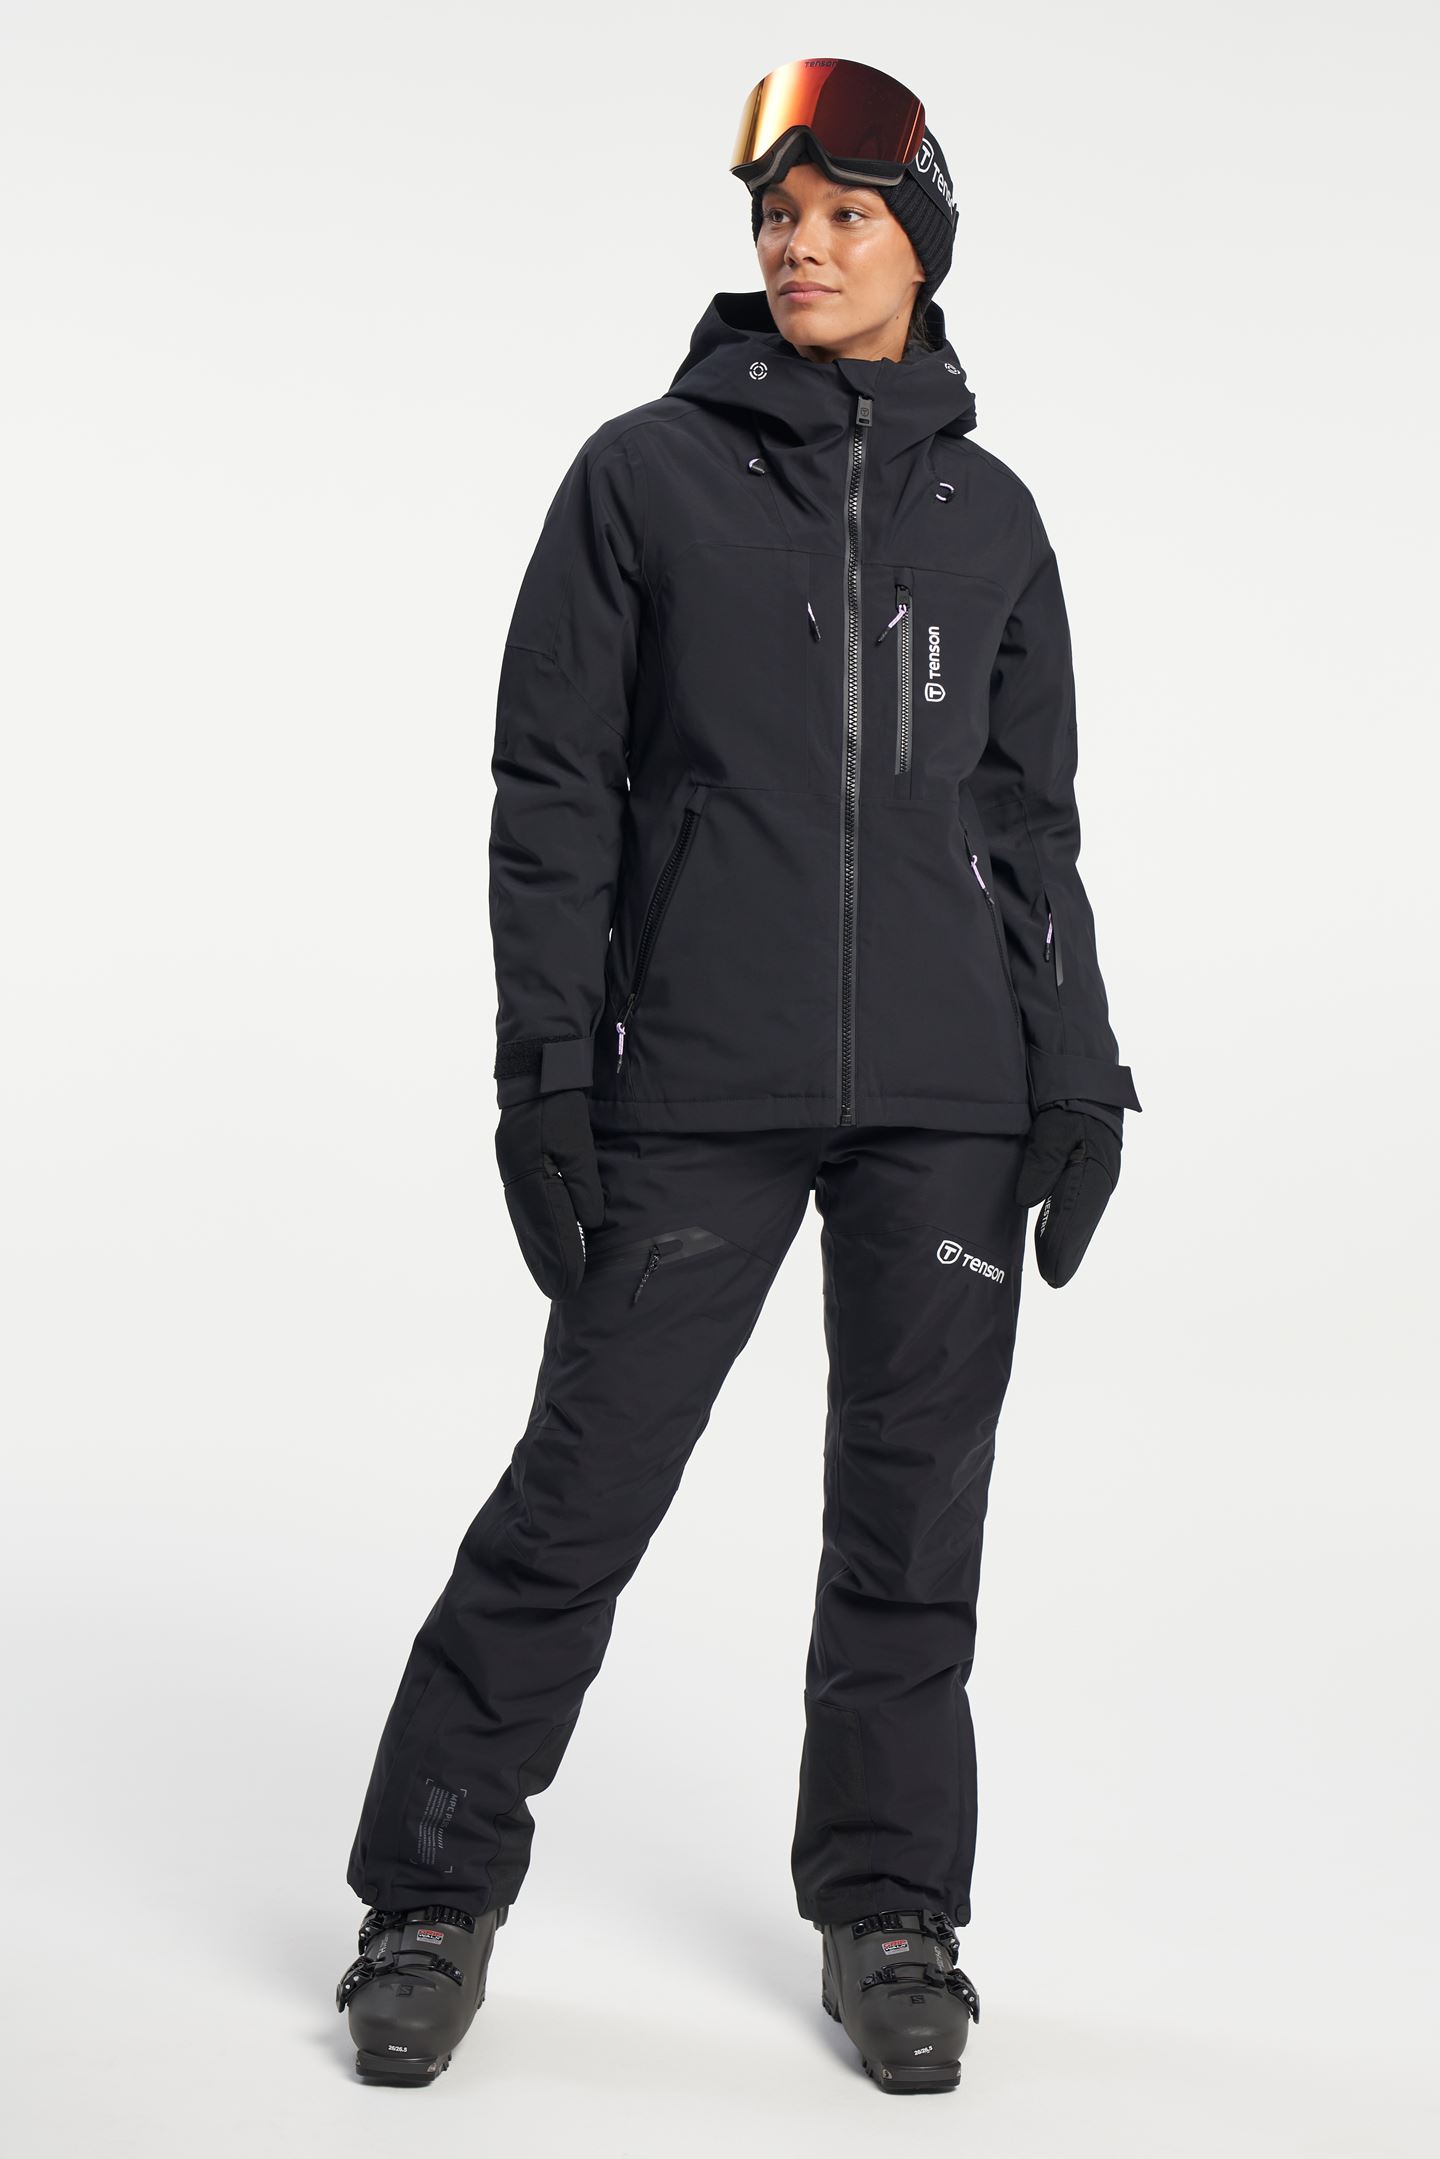 Orbit Ski Jacket - Women's Lined Ski Jacket - Black